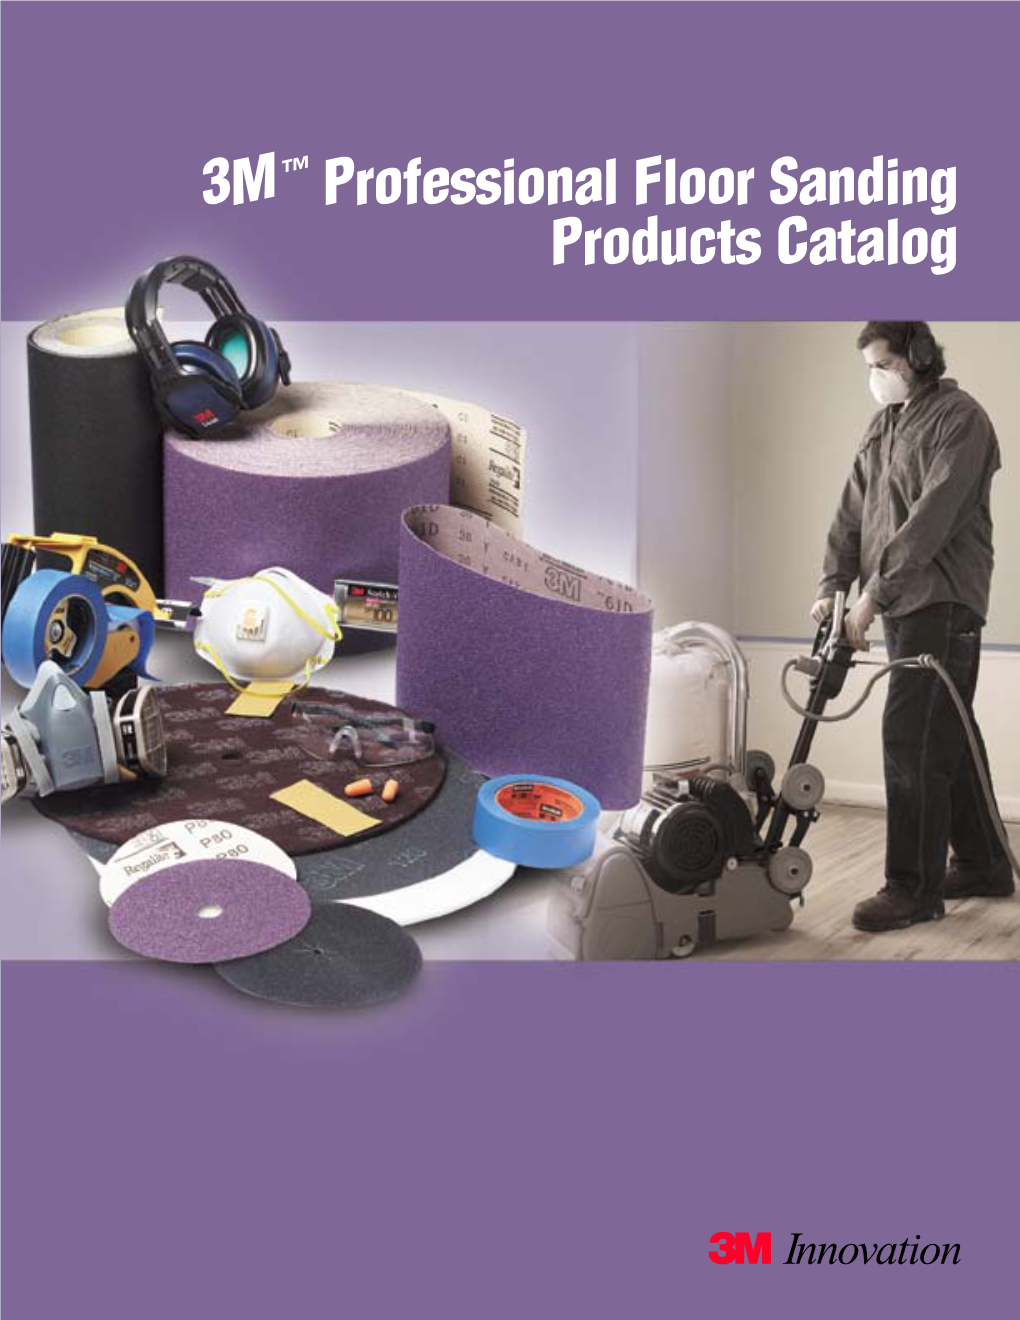 3M™ Professional Floor Sanding Products Catalog